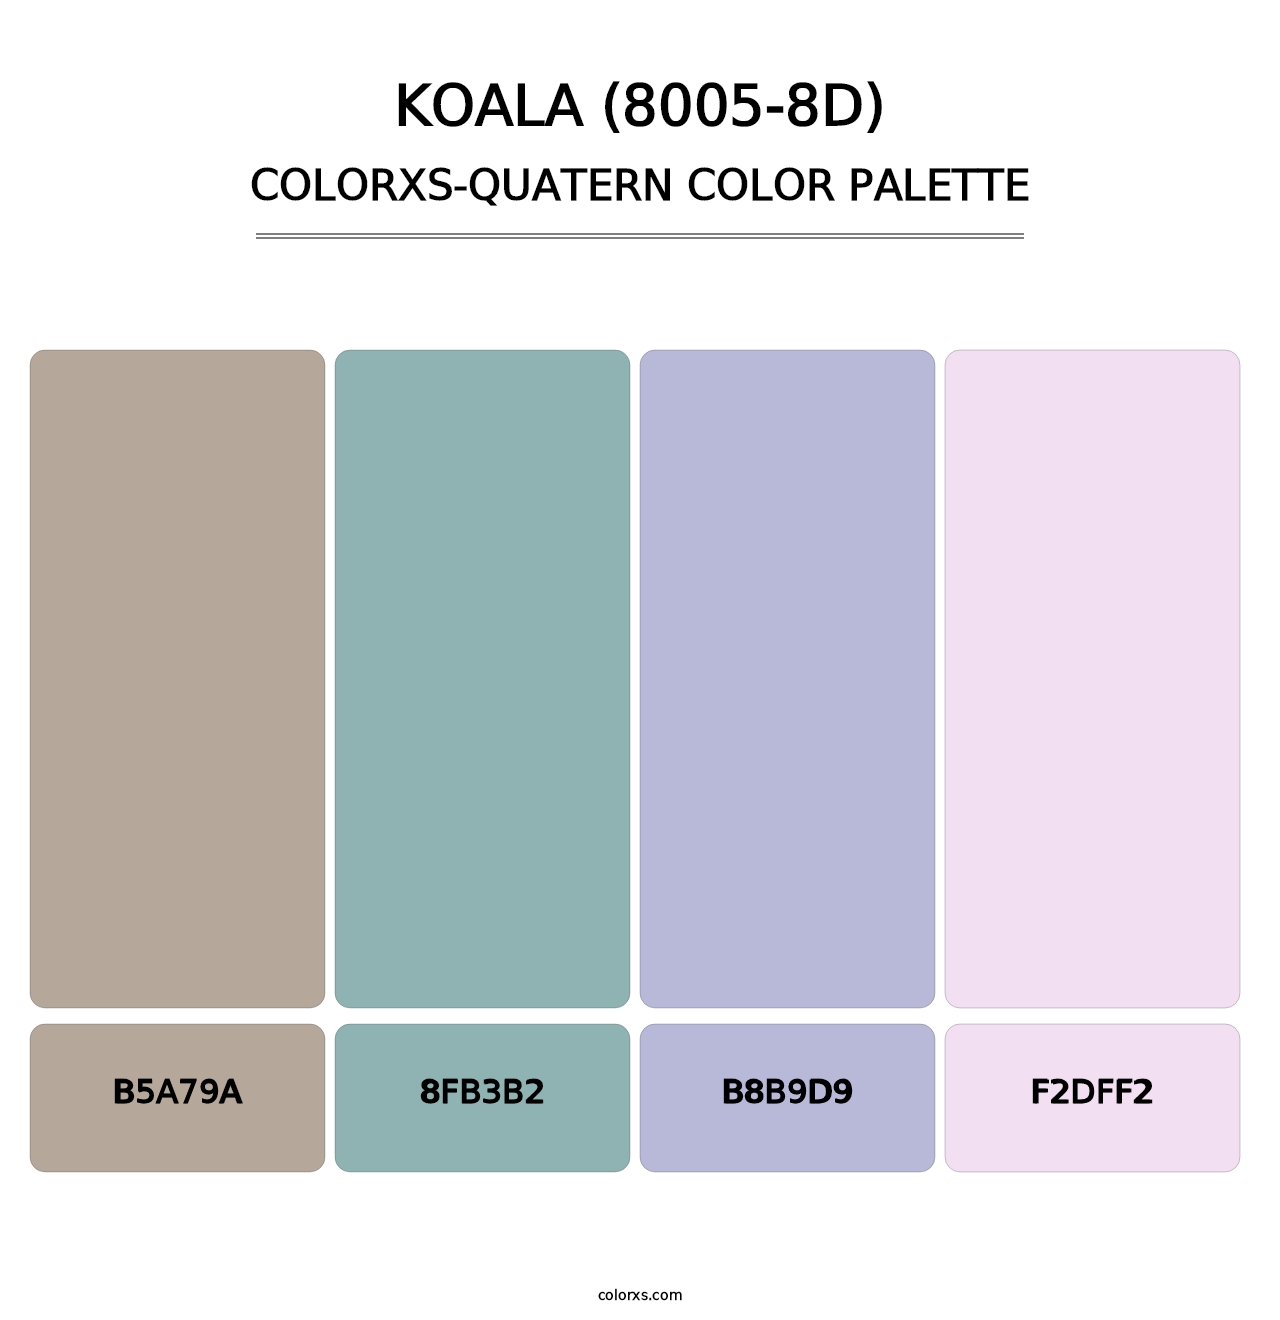 Koala (8005-8D) - Colorxs Quatern Palette